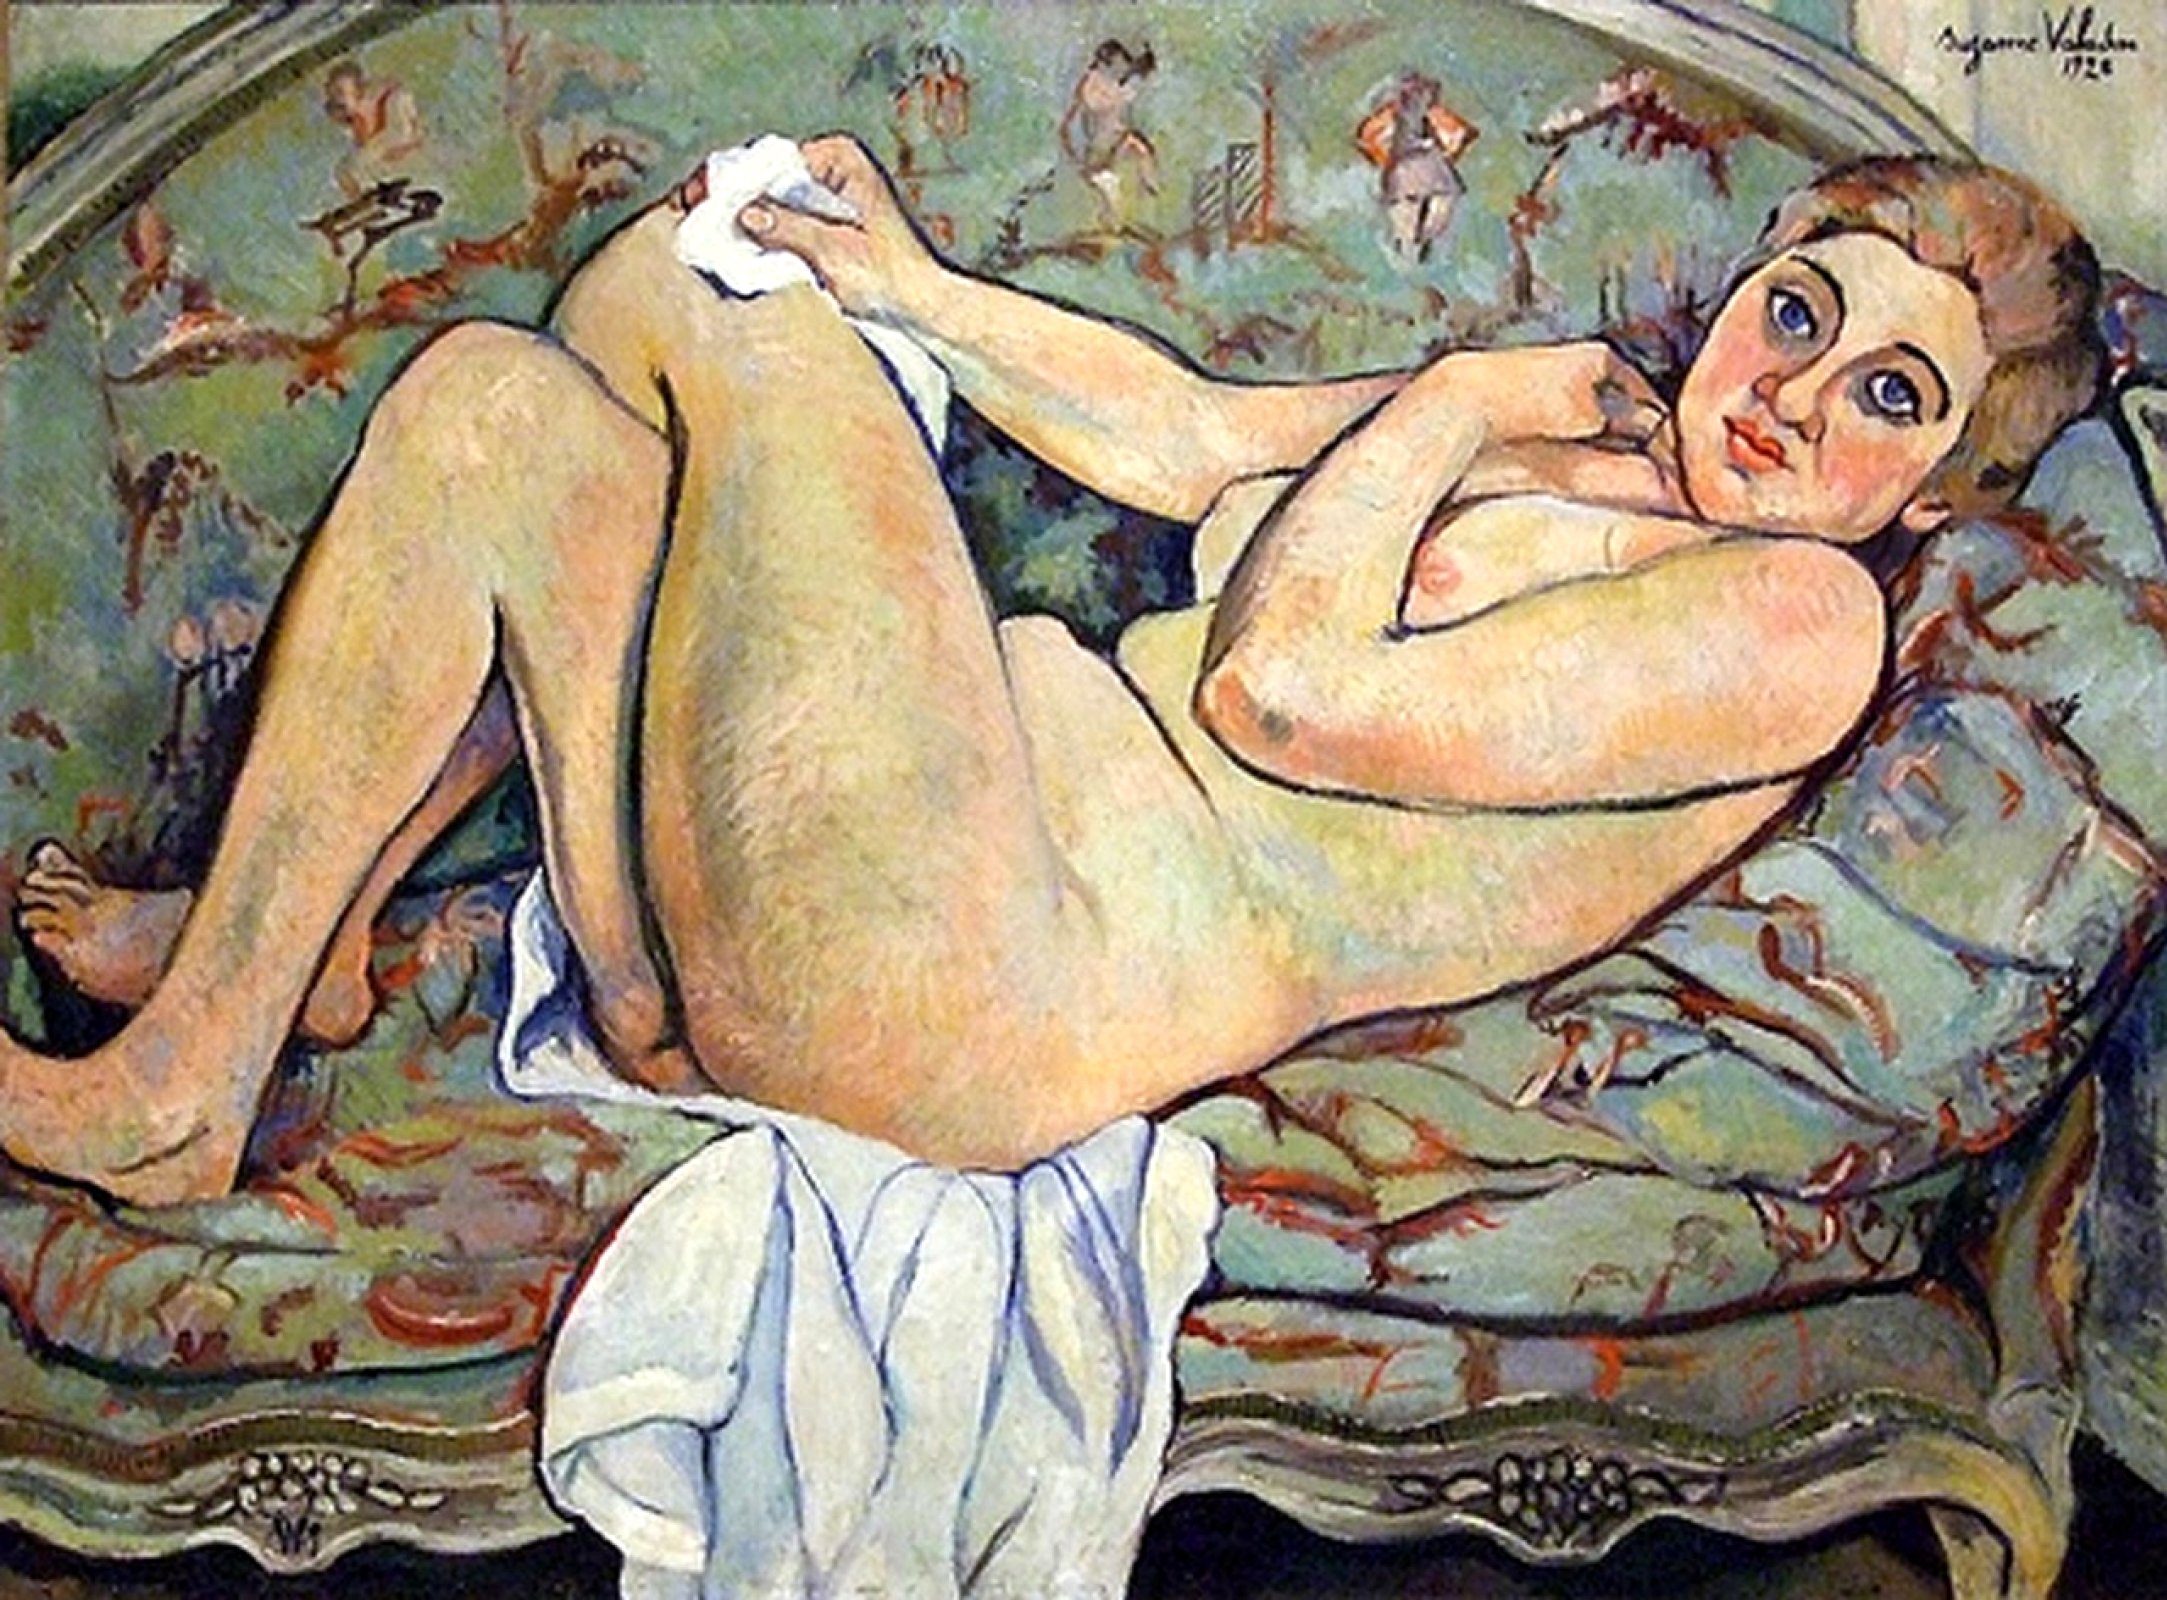 Naked Suzanne Valadon